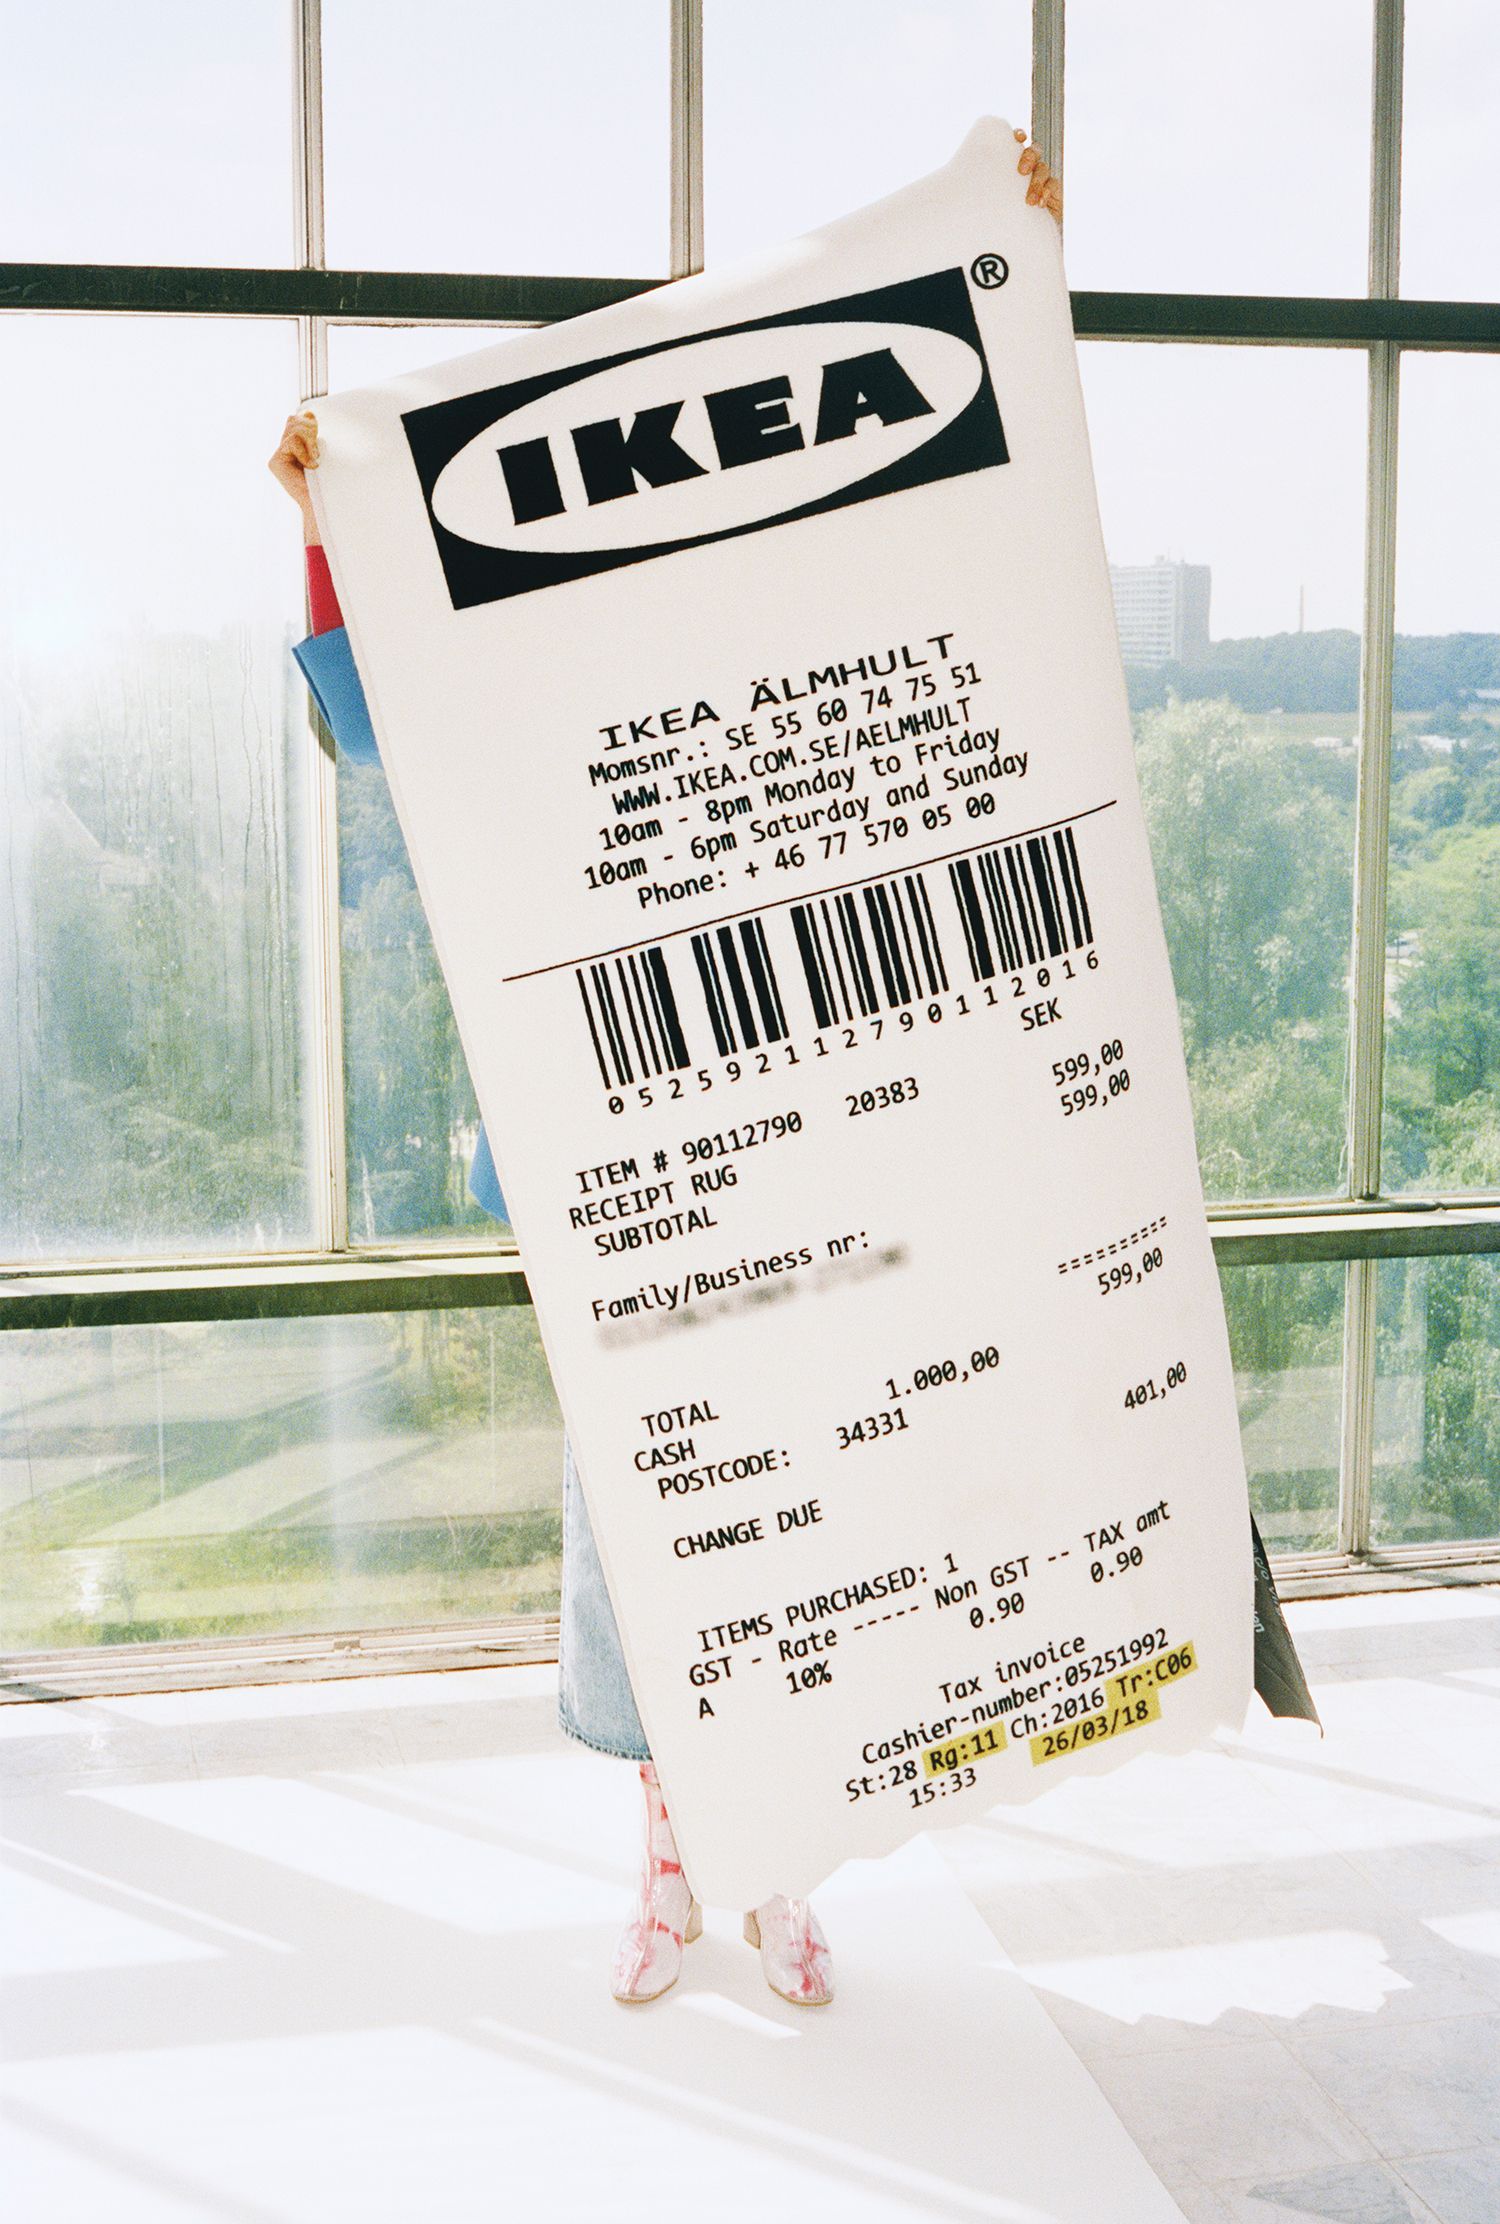 Virgil Abloh Virgil X Ikea, Markerad Mirror Brand New In Packaging🔥